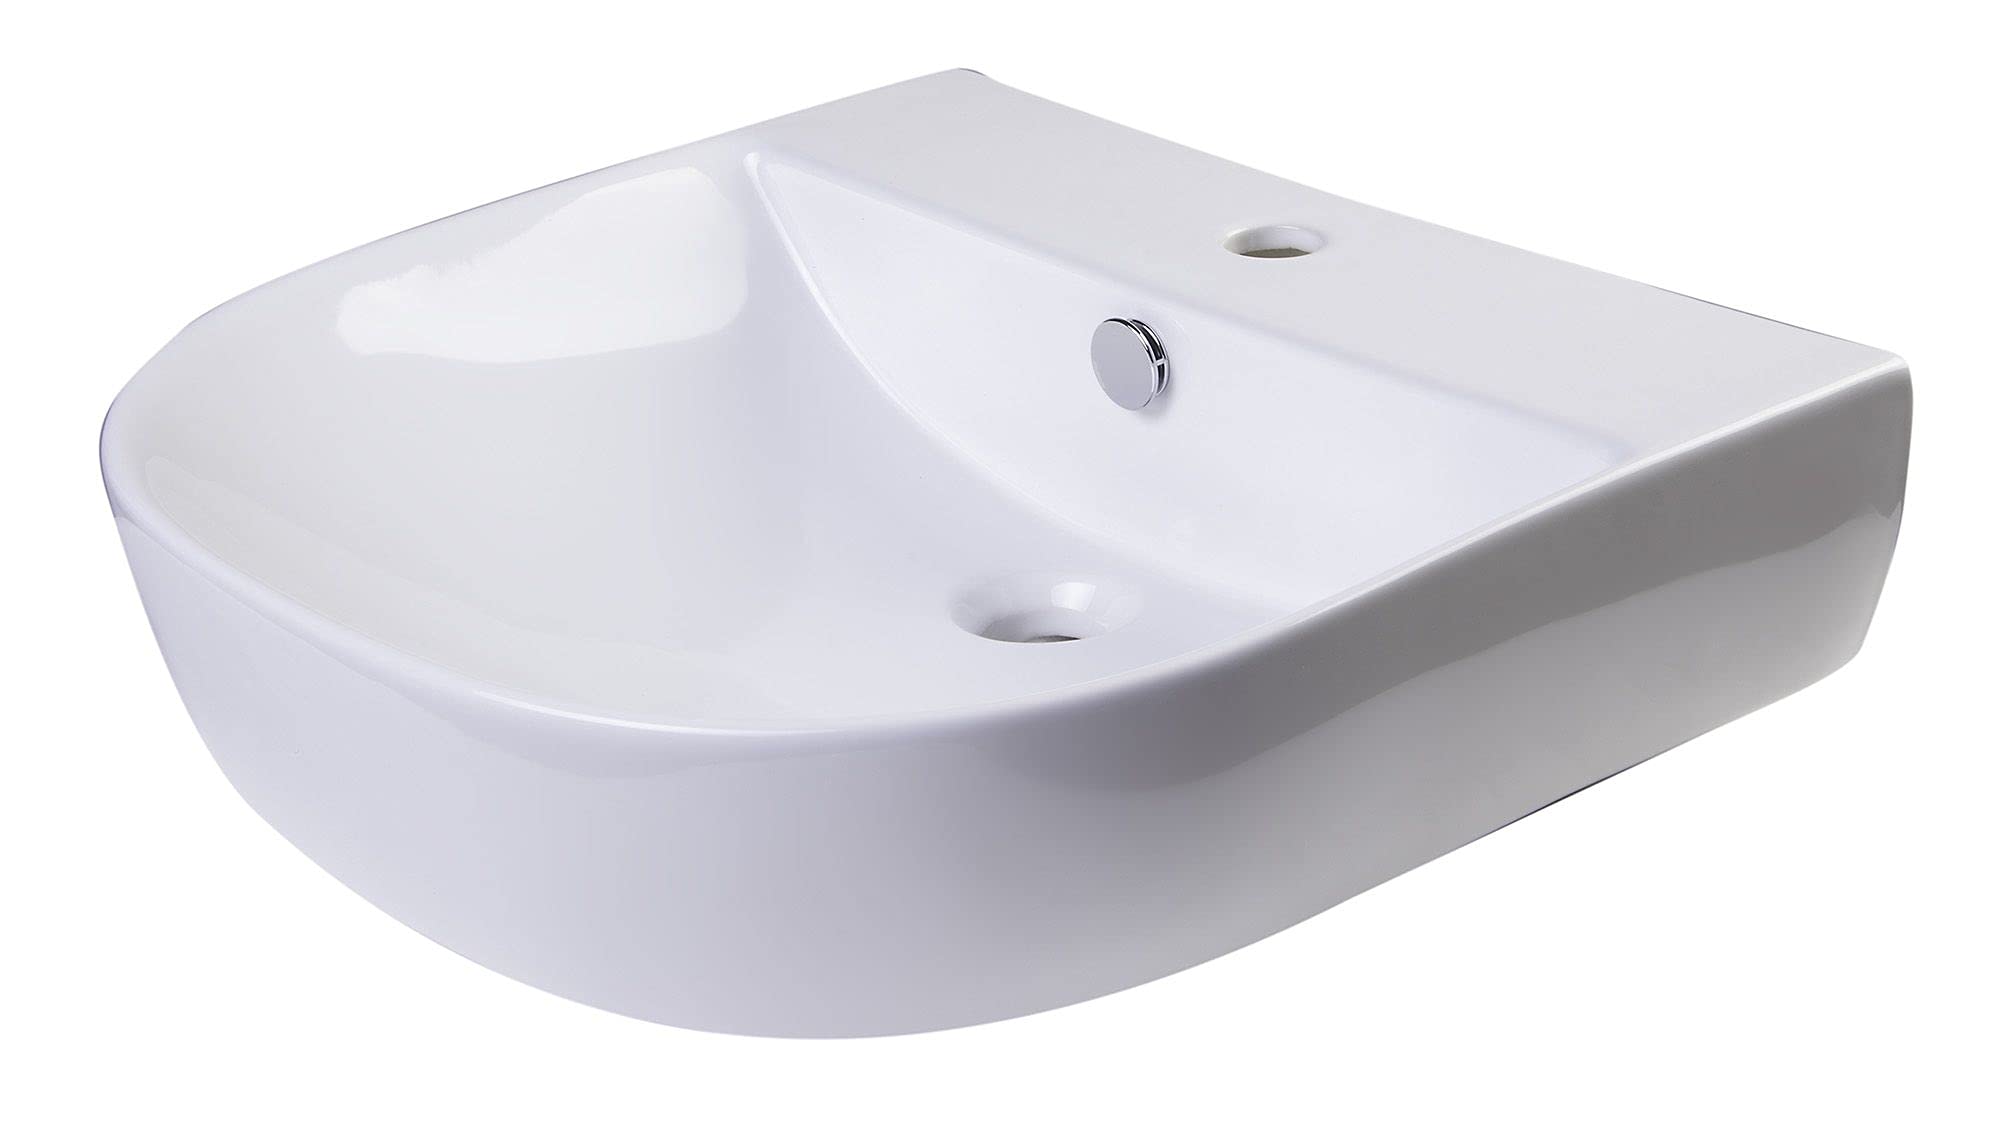 ALFI brand AB110 D-Bowl Porcelain Wall Mounted Bath Sink, 20